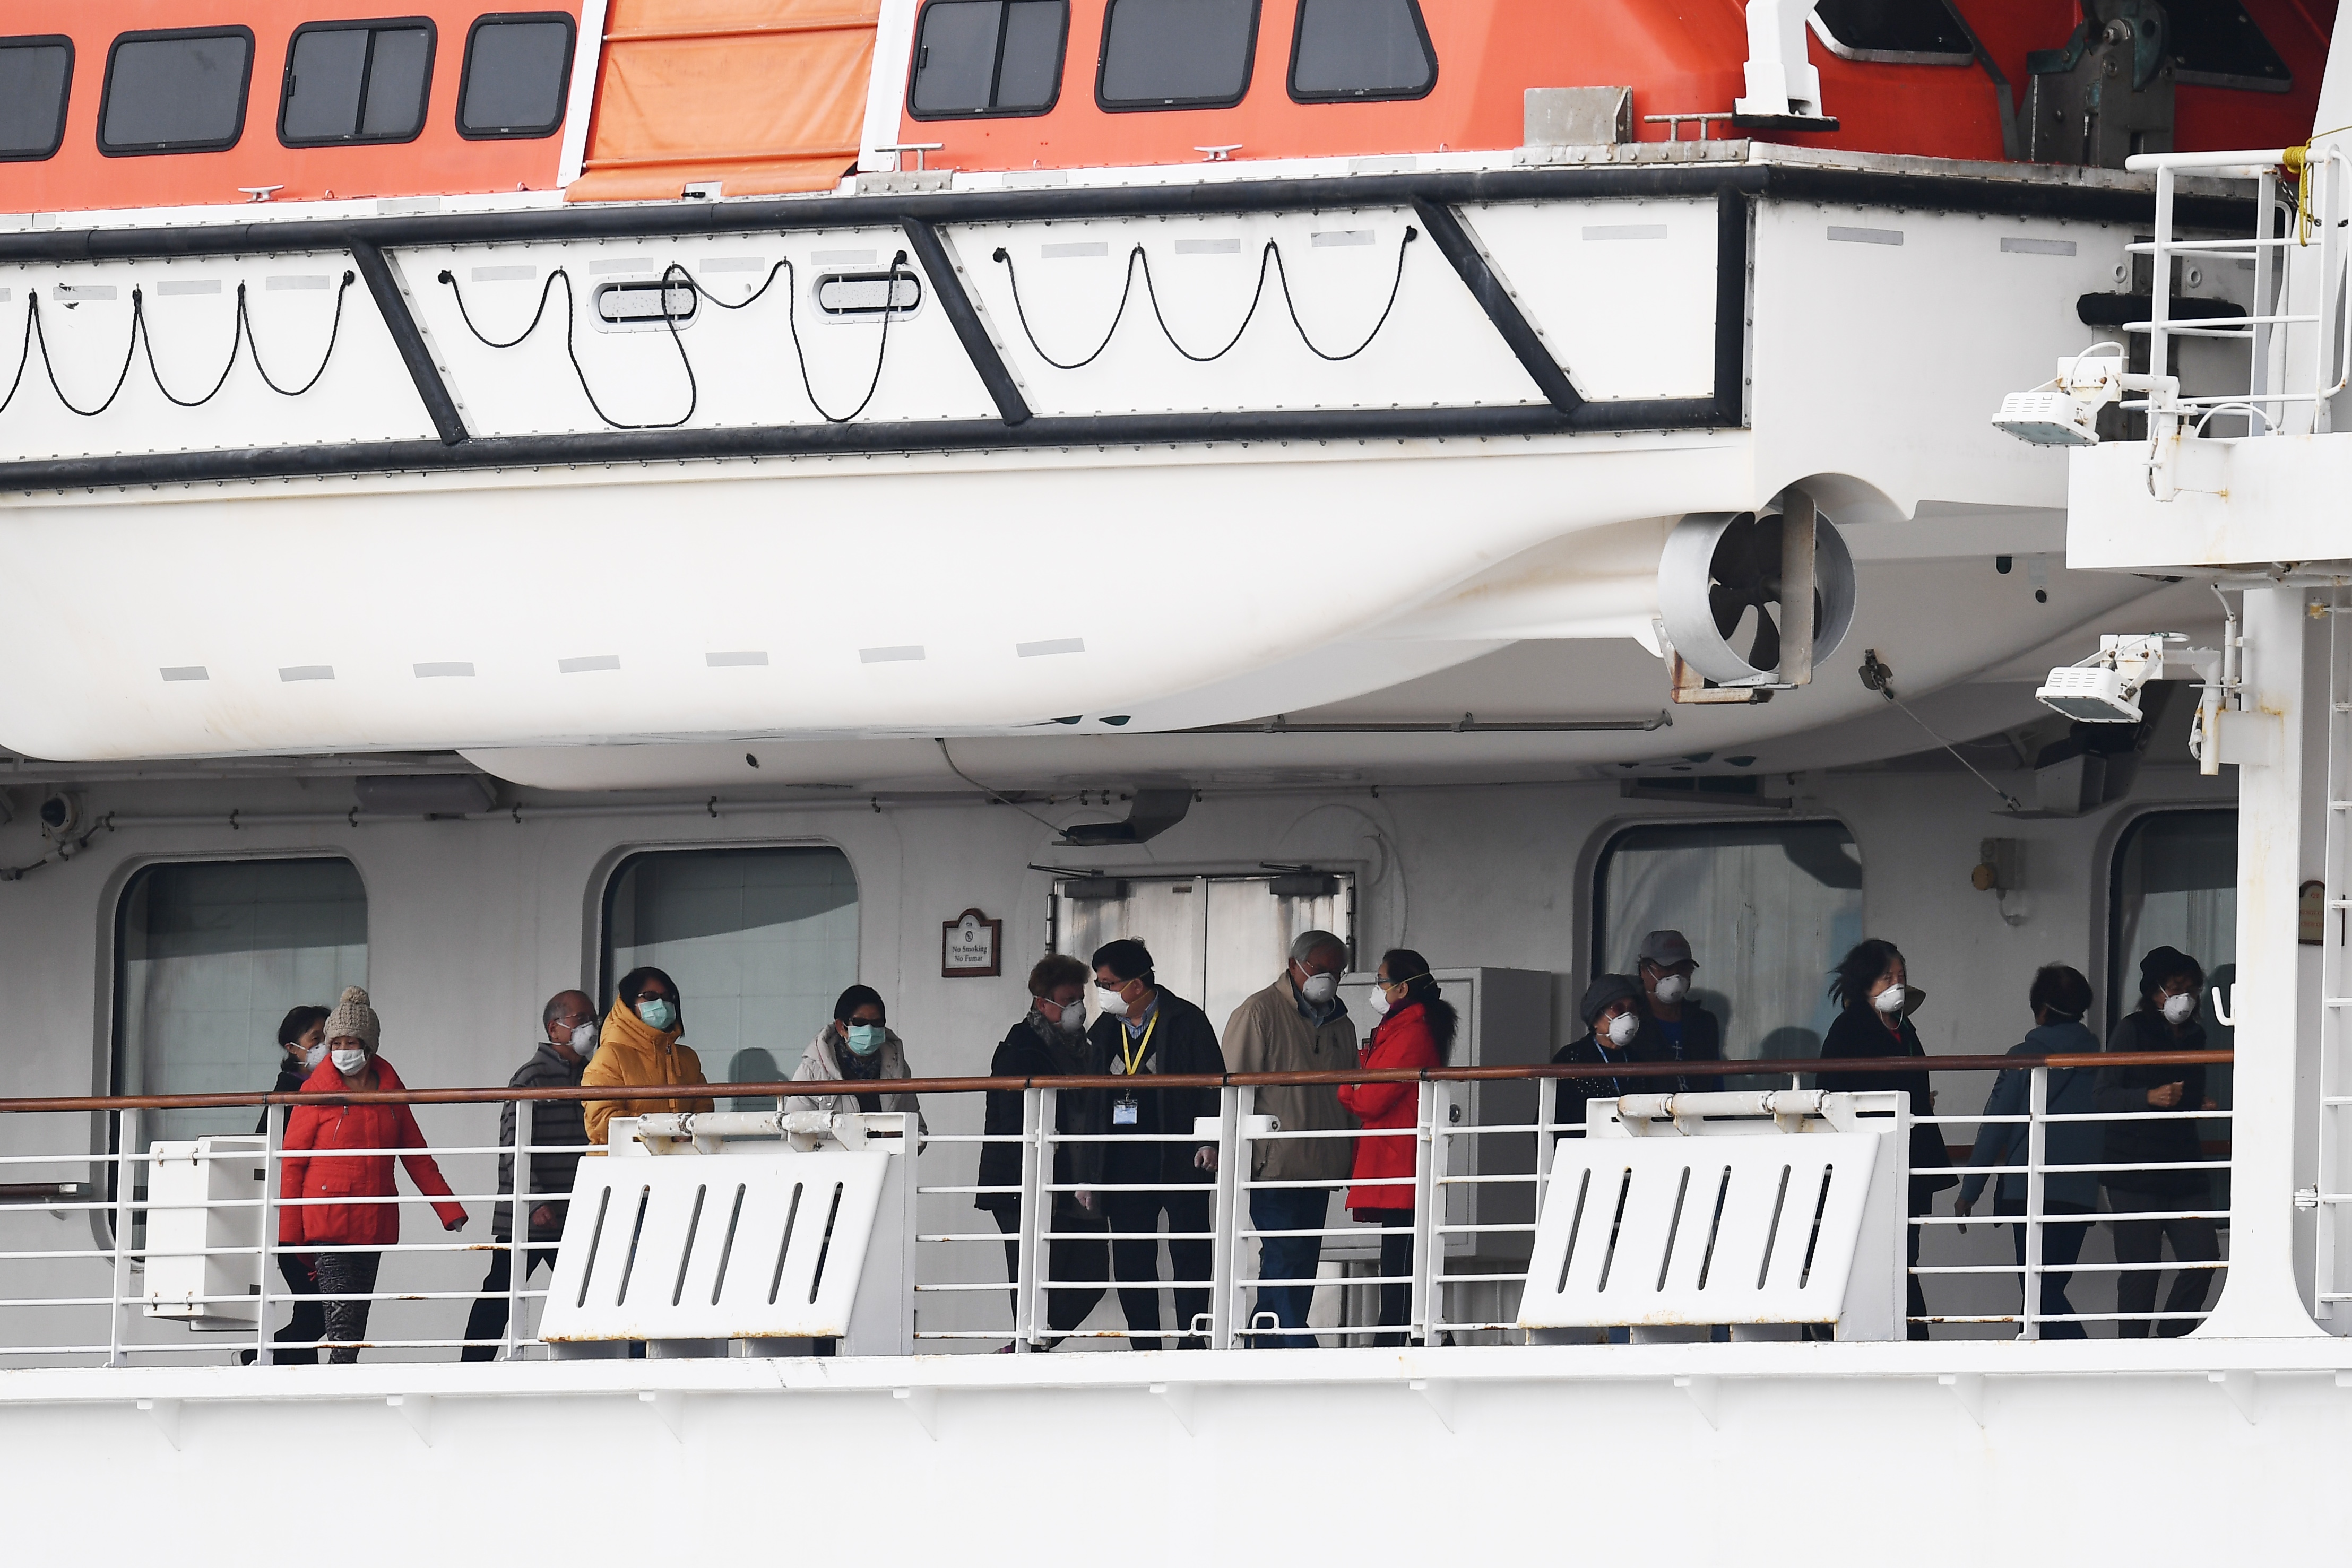 Passengers walk along the deck of the Diamond Princess cruise ship, docked in Yokohama, Japan, on February 14, 2020.